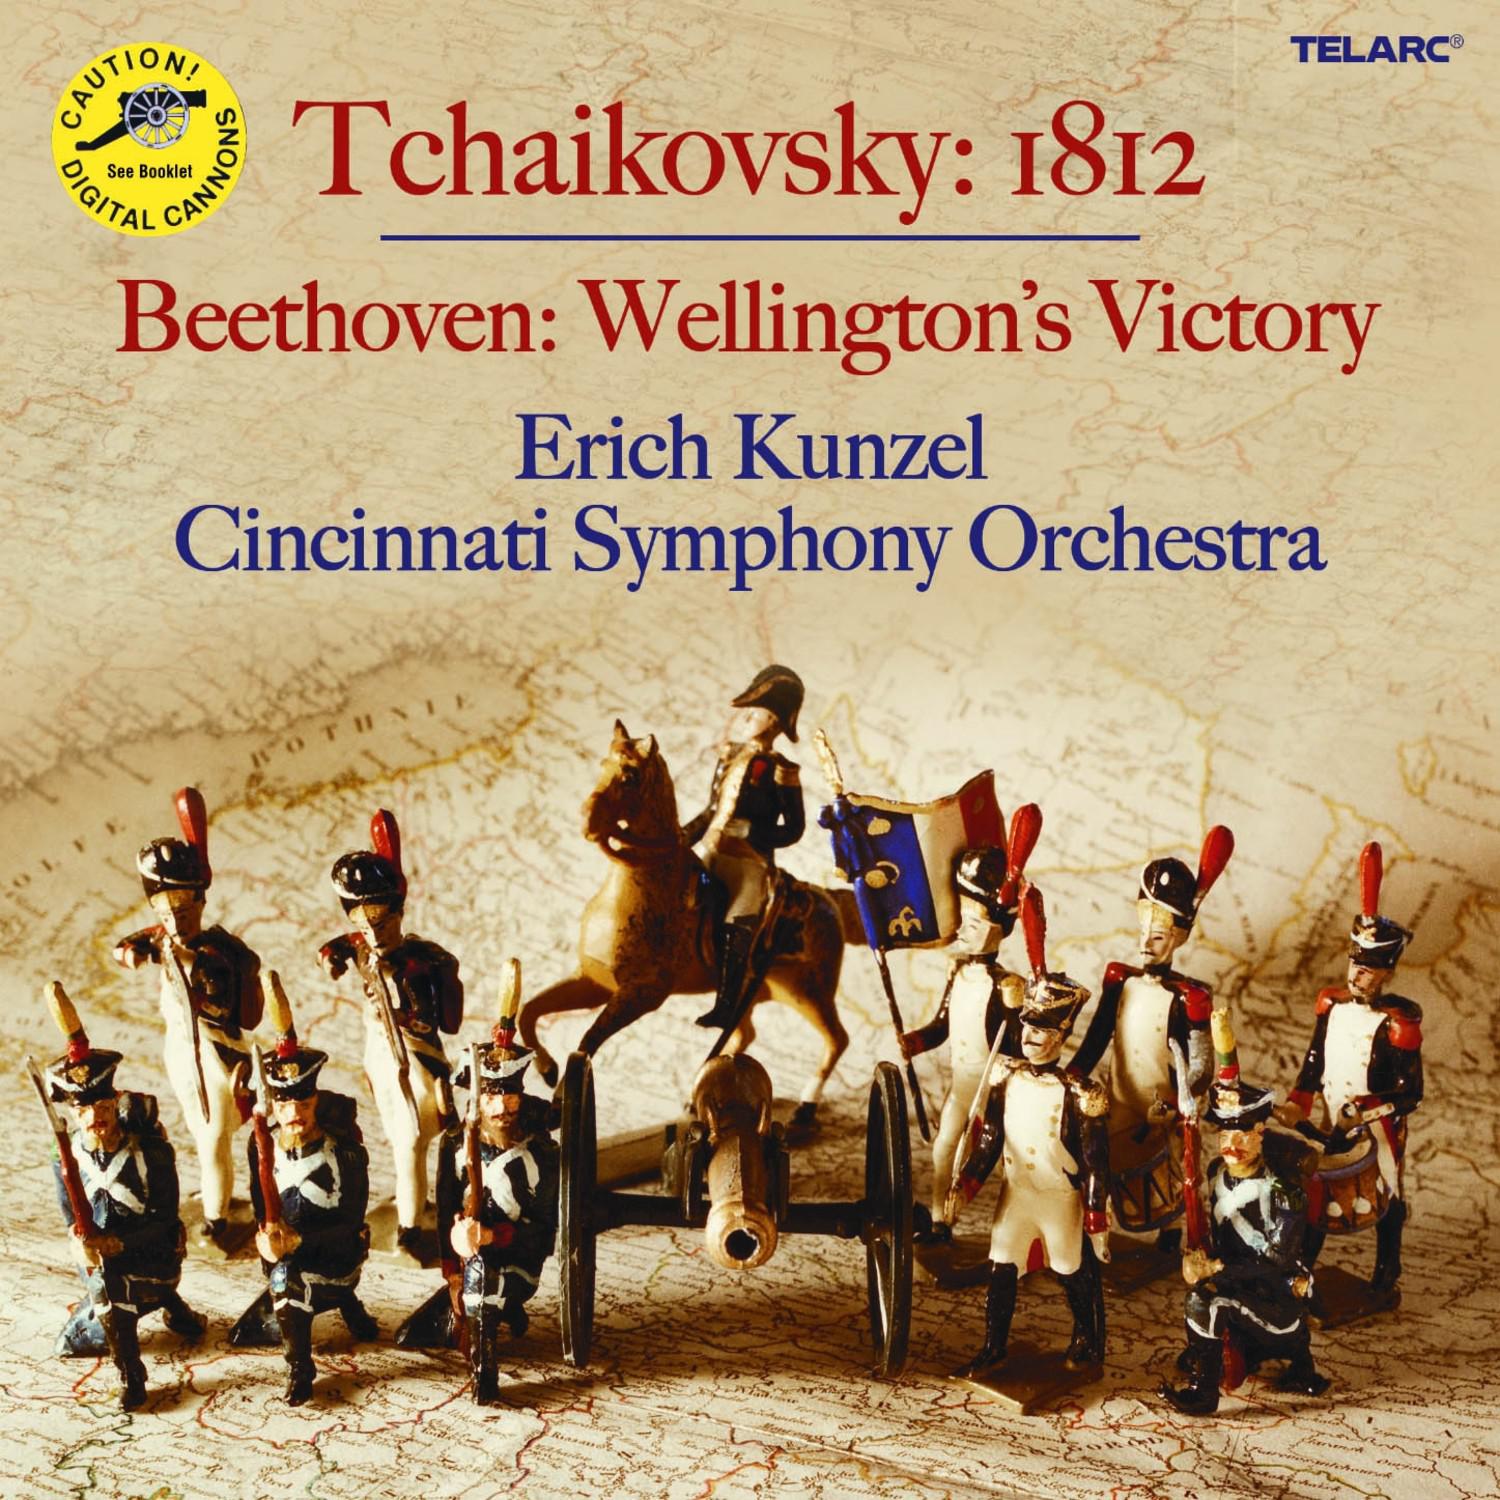 Tchaikovsky: 1812 Overture / Beethoven: Wellington's Victory